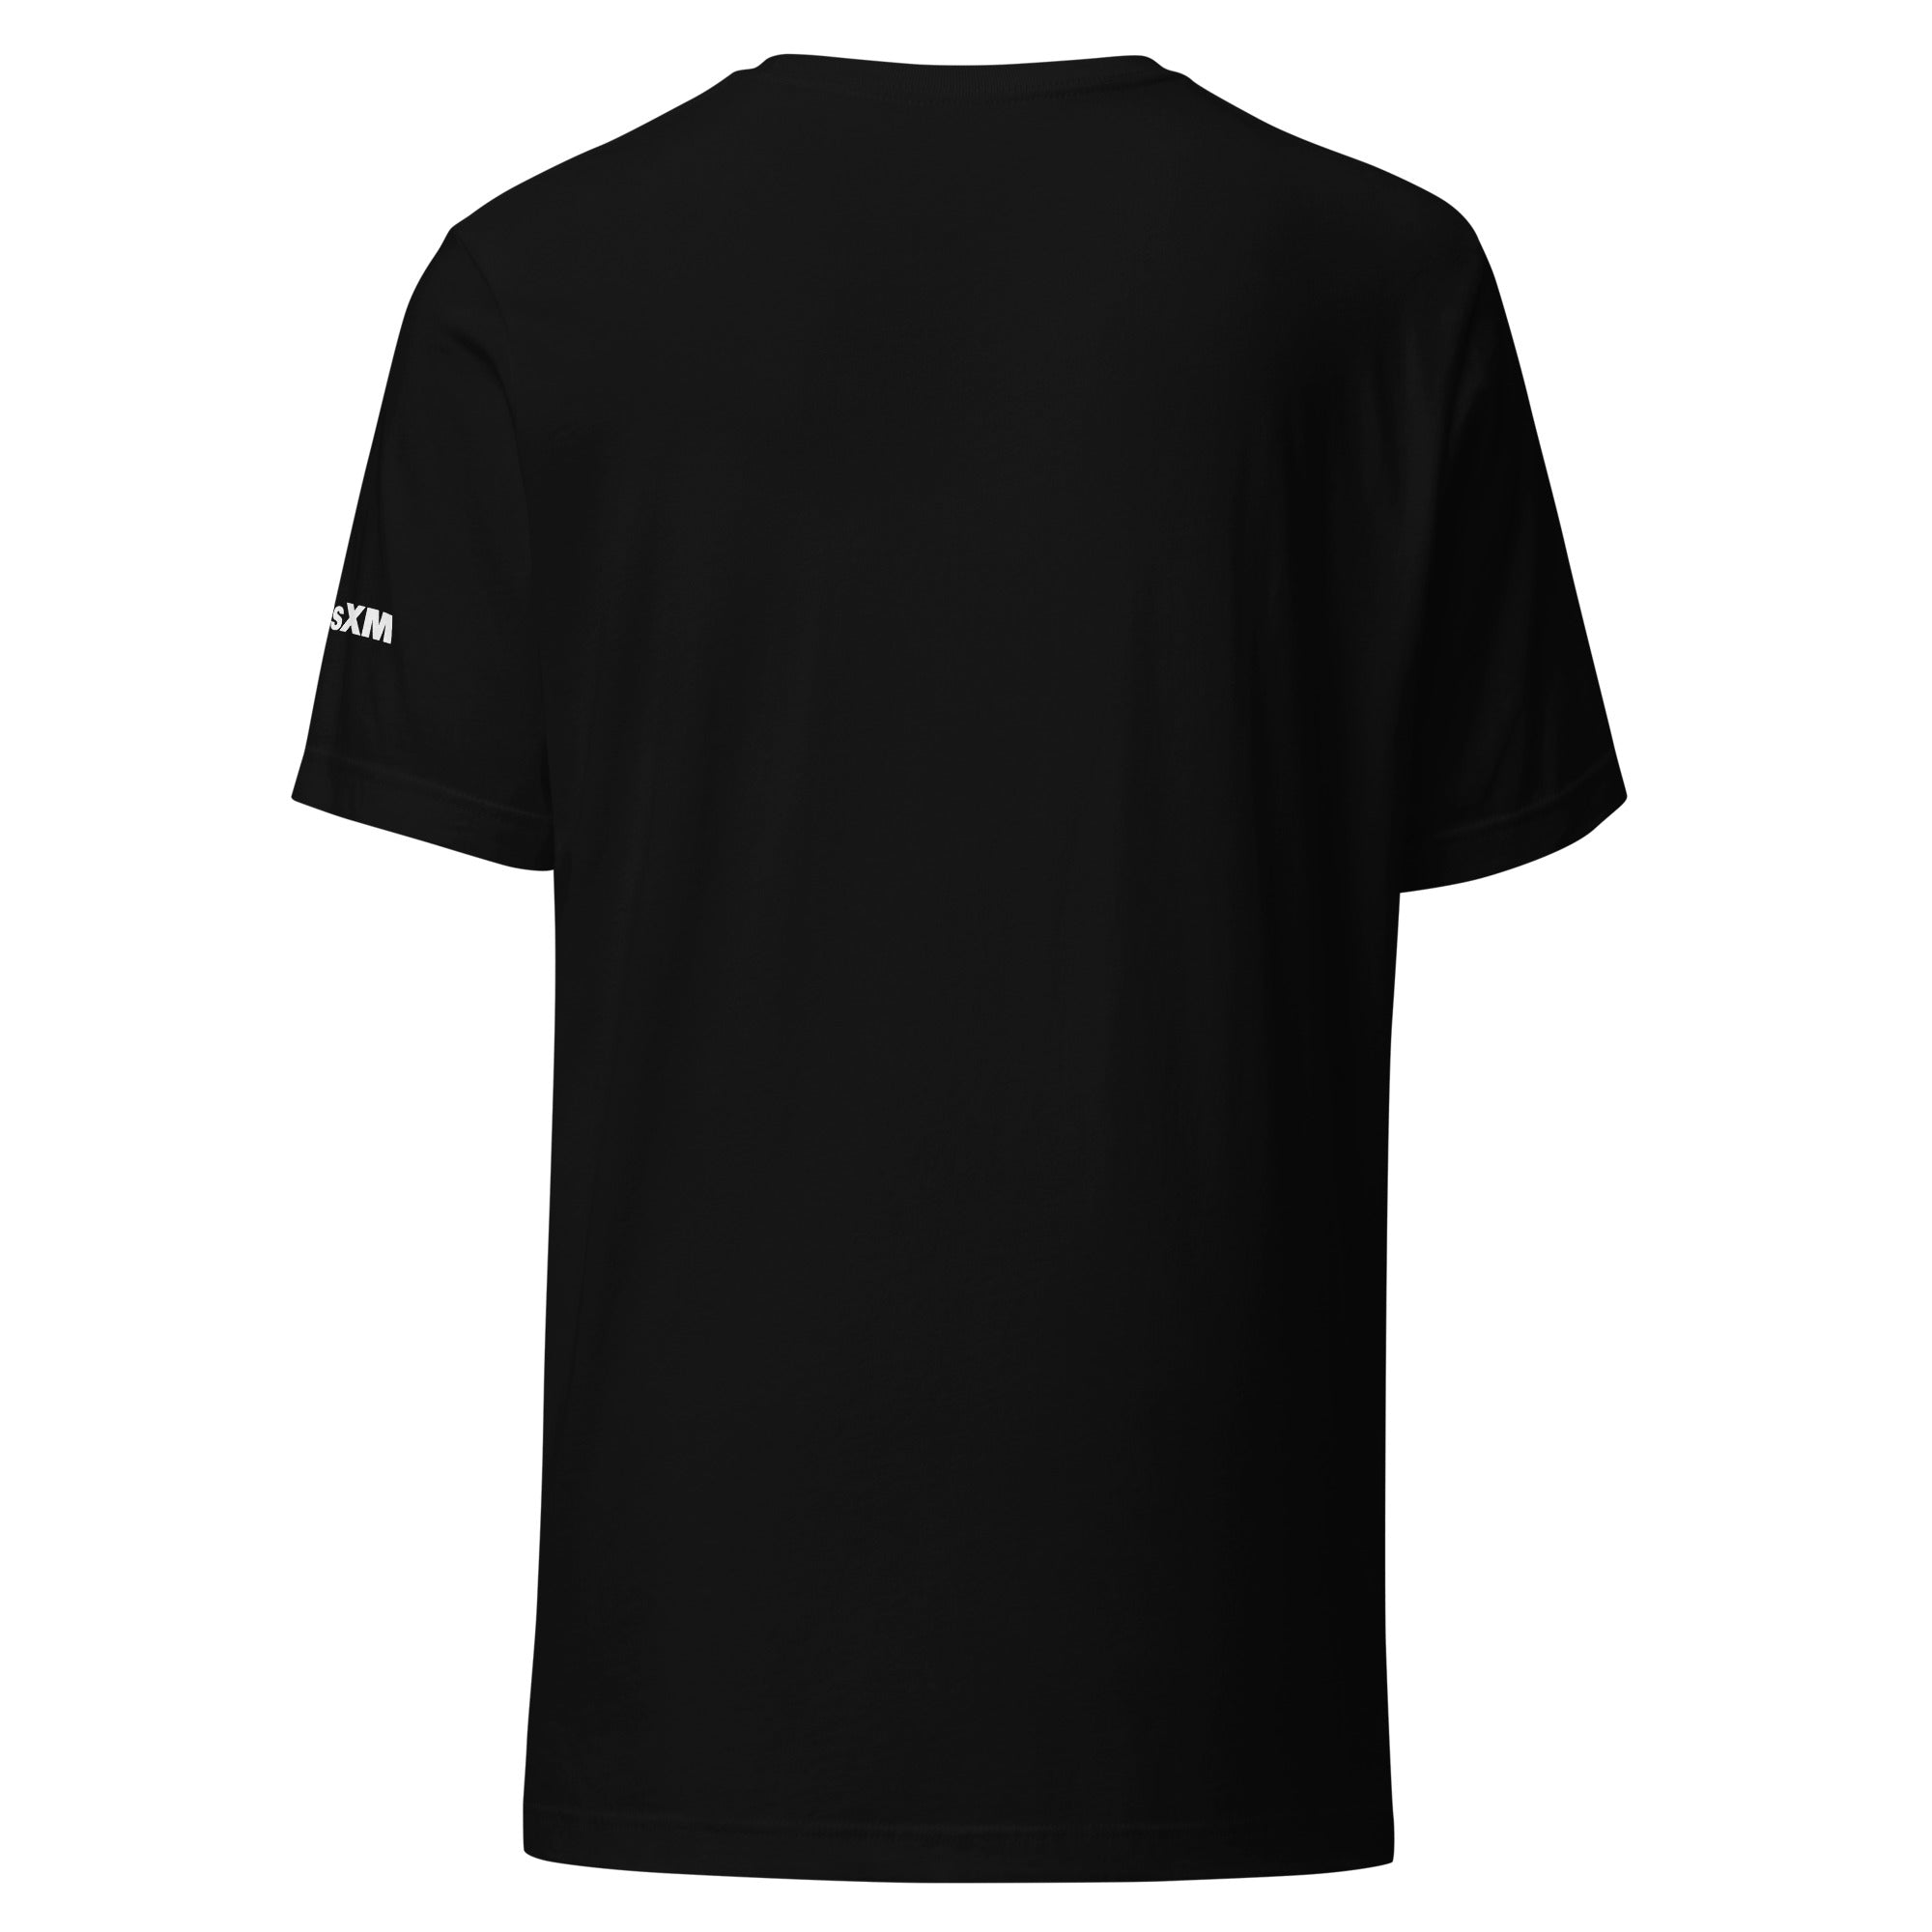 Enlighten: T-shirt (Black)